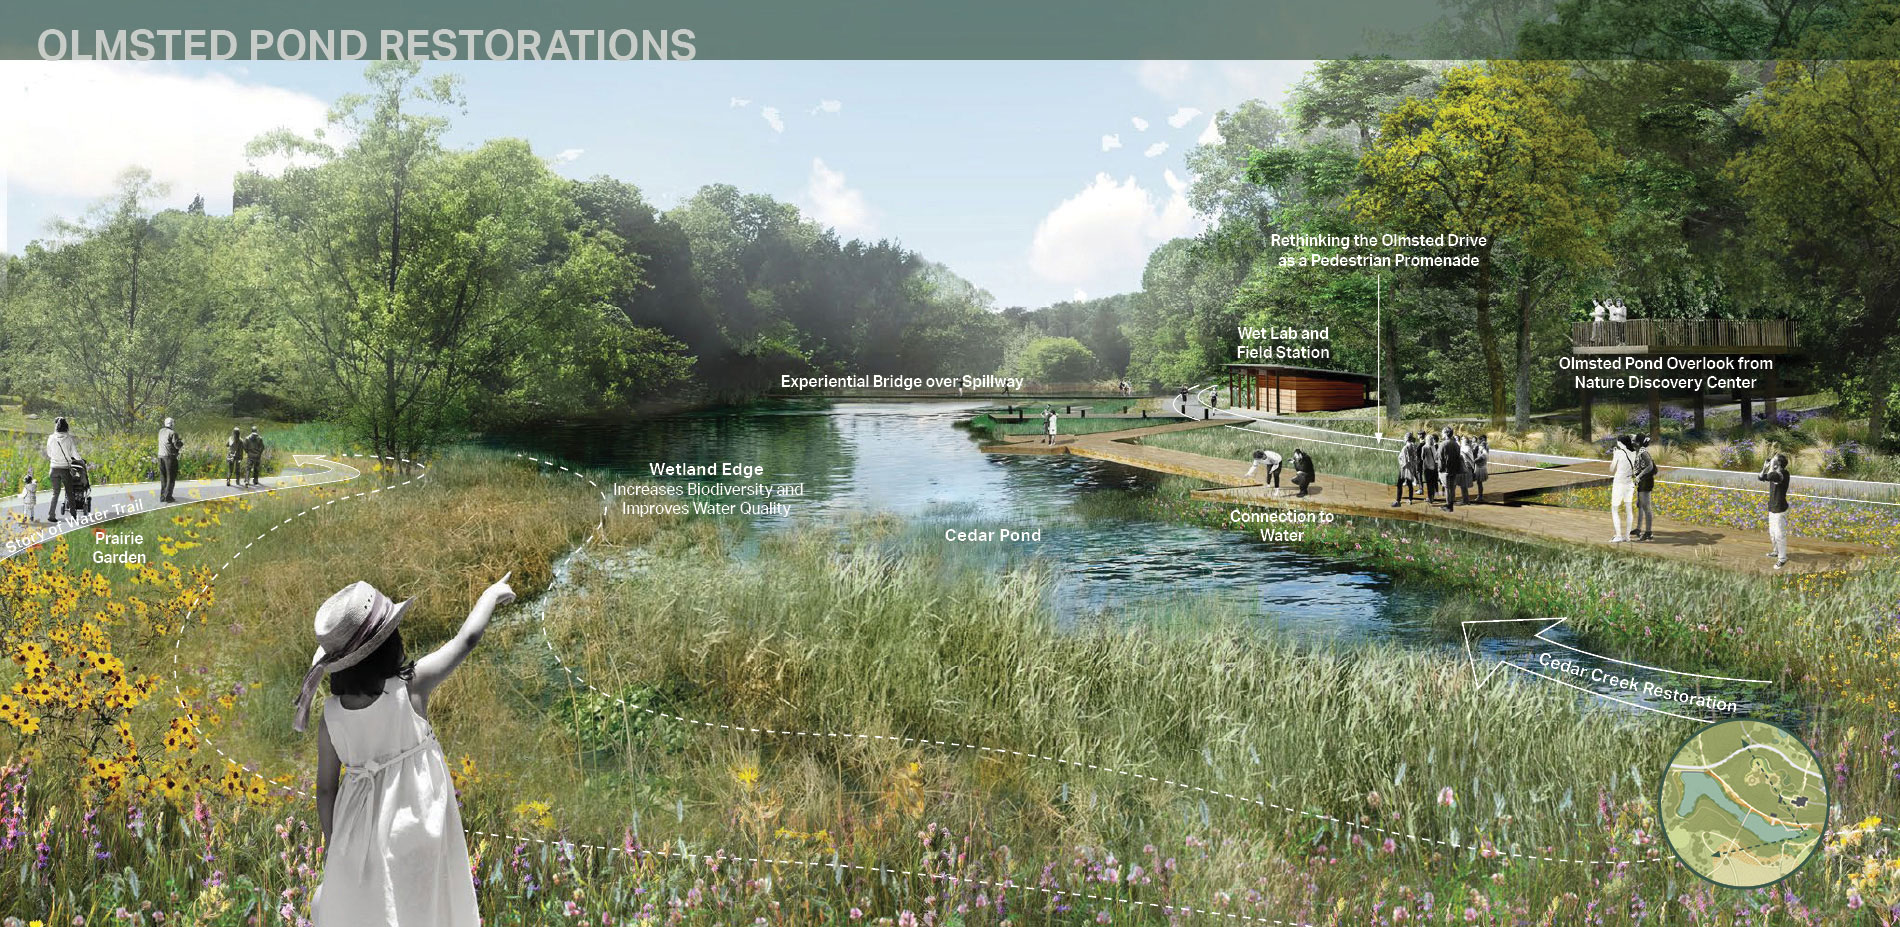 Olmsted Pond Restorations